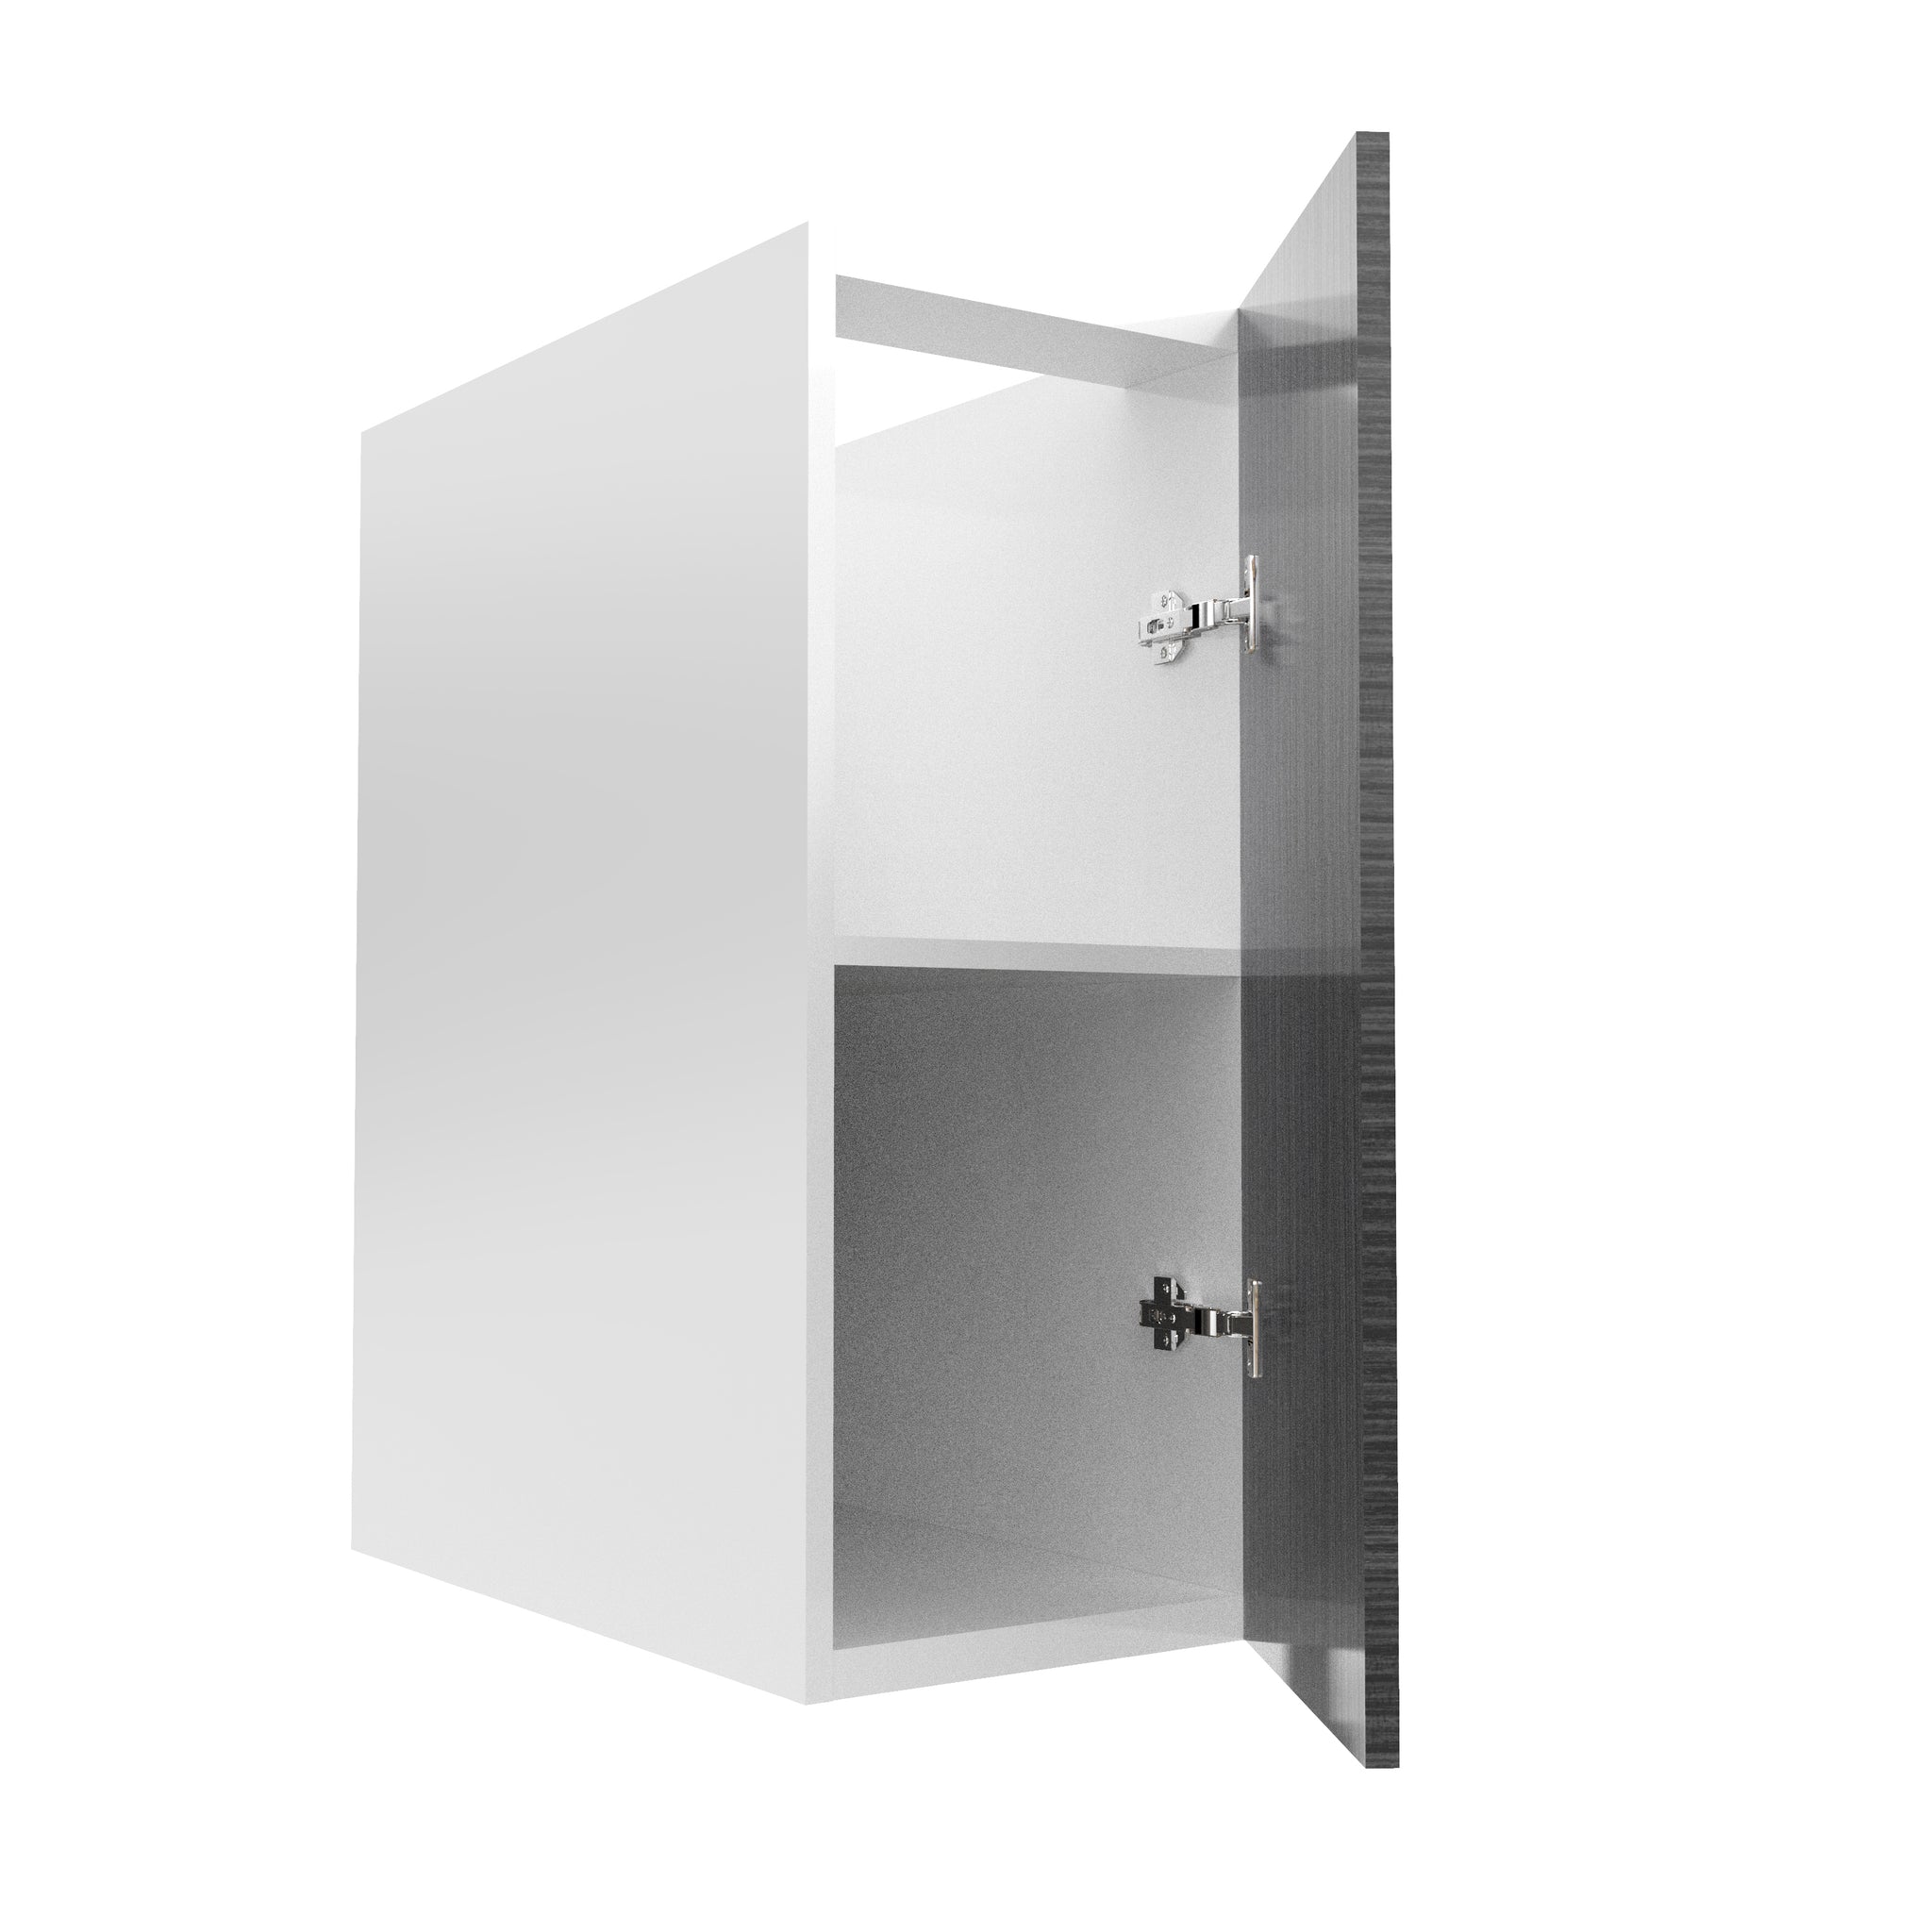 RTA - Dark Wood - Full Height Single Door Base Cabinets | 12"W x 30"H x 23.8"D